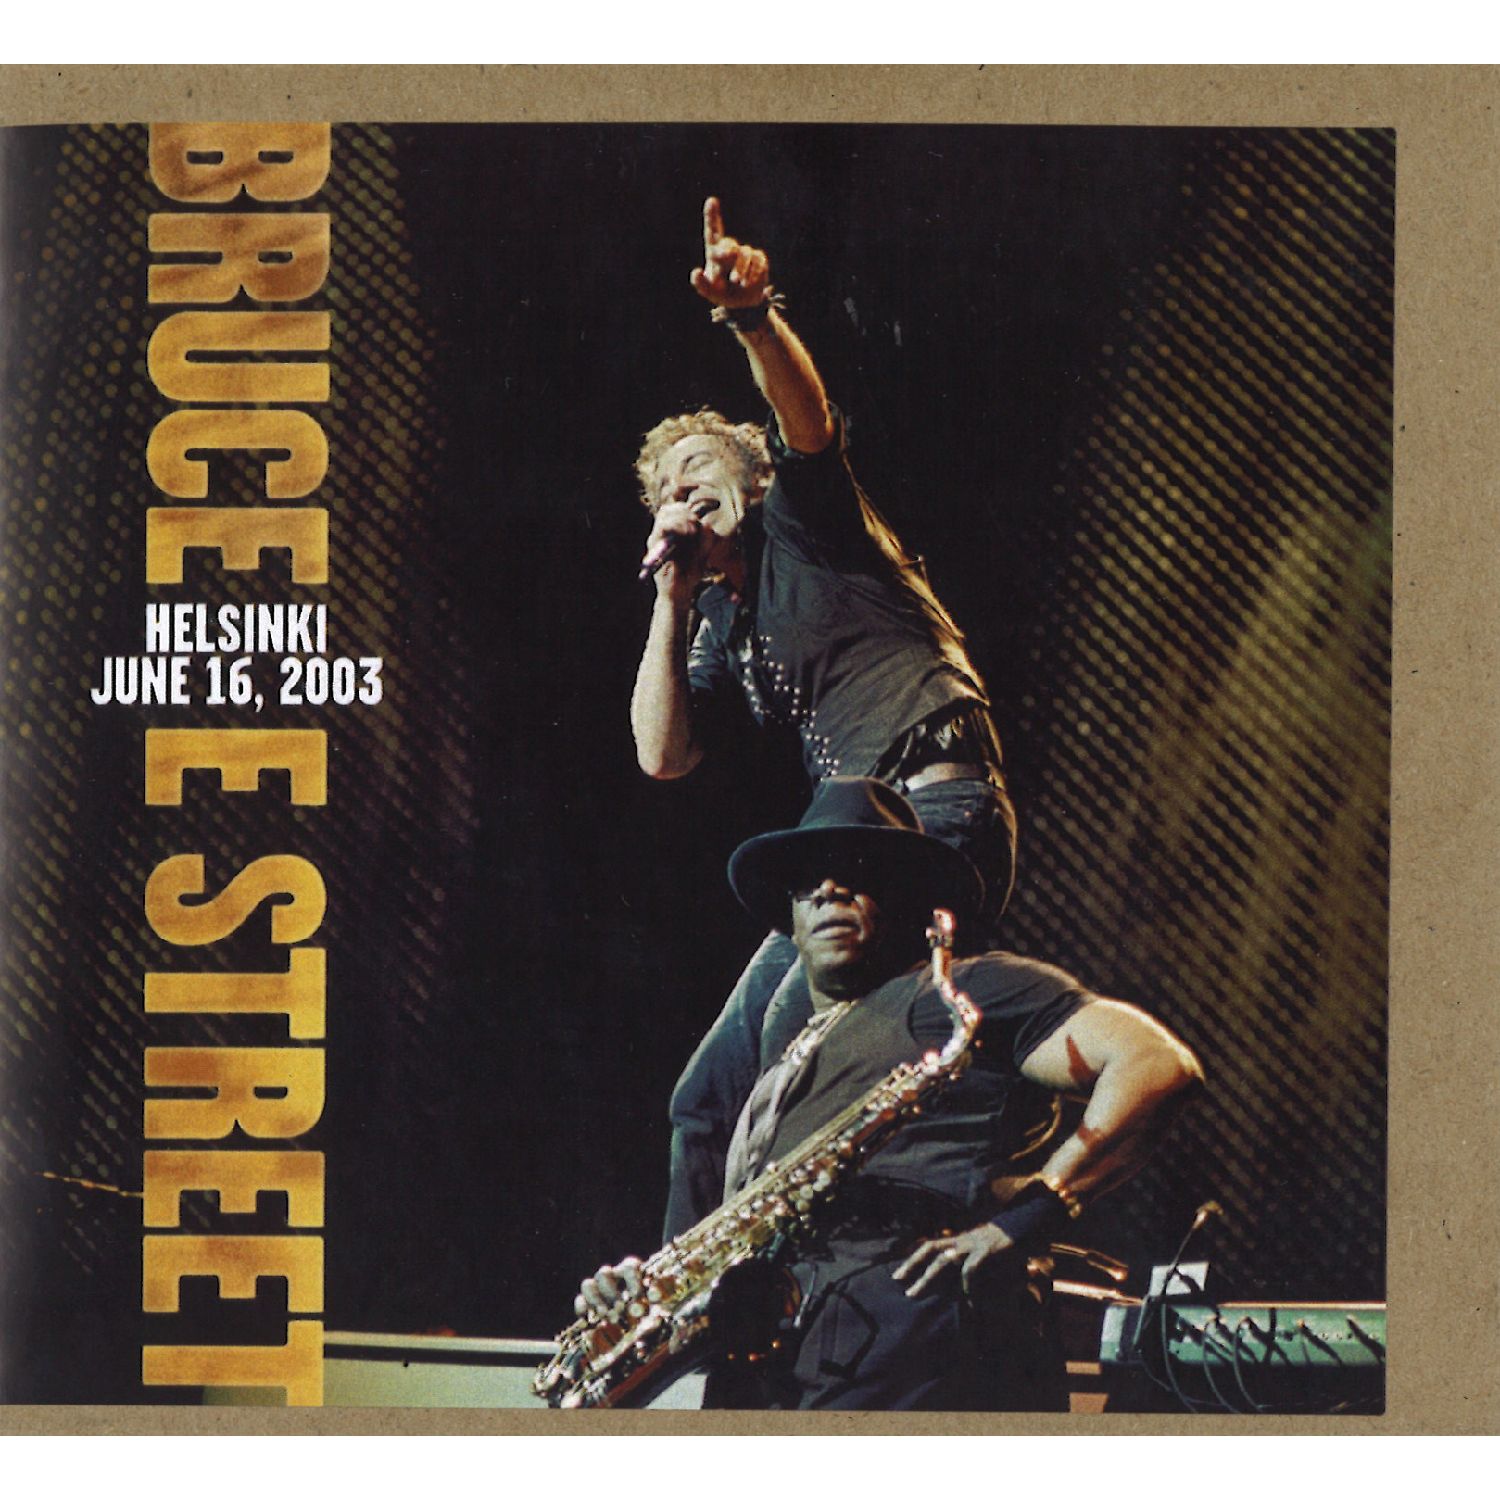 BRUCE SPRINGSTEEN & THE E-STREET BAND / ブルース・スプリングスティーン&ザ・Eストリート・バンド / OLYMPIASTADION HELSINKI, FI JUNE 16, 2003 (3CDR)